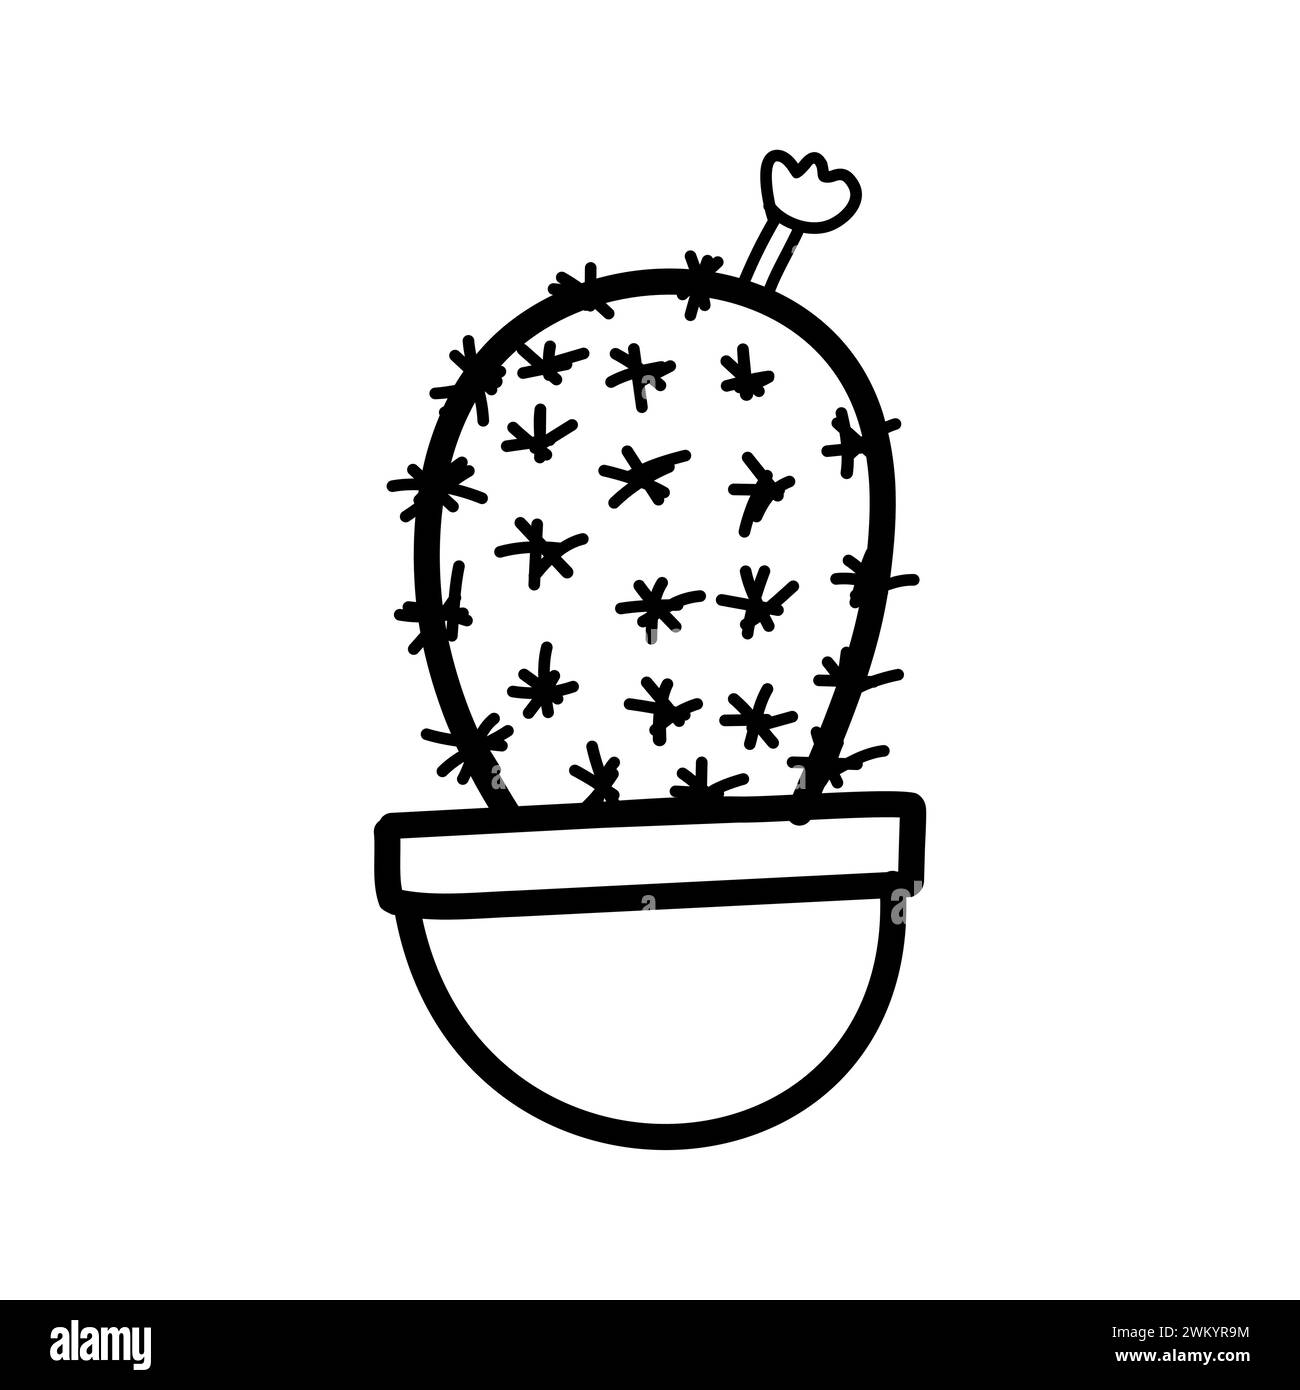 art illustration design of cactus Stock Vector